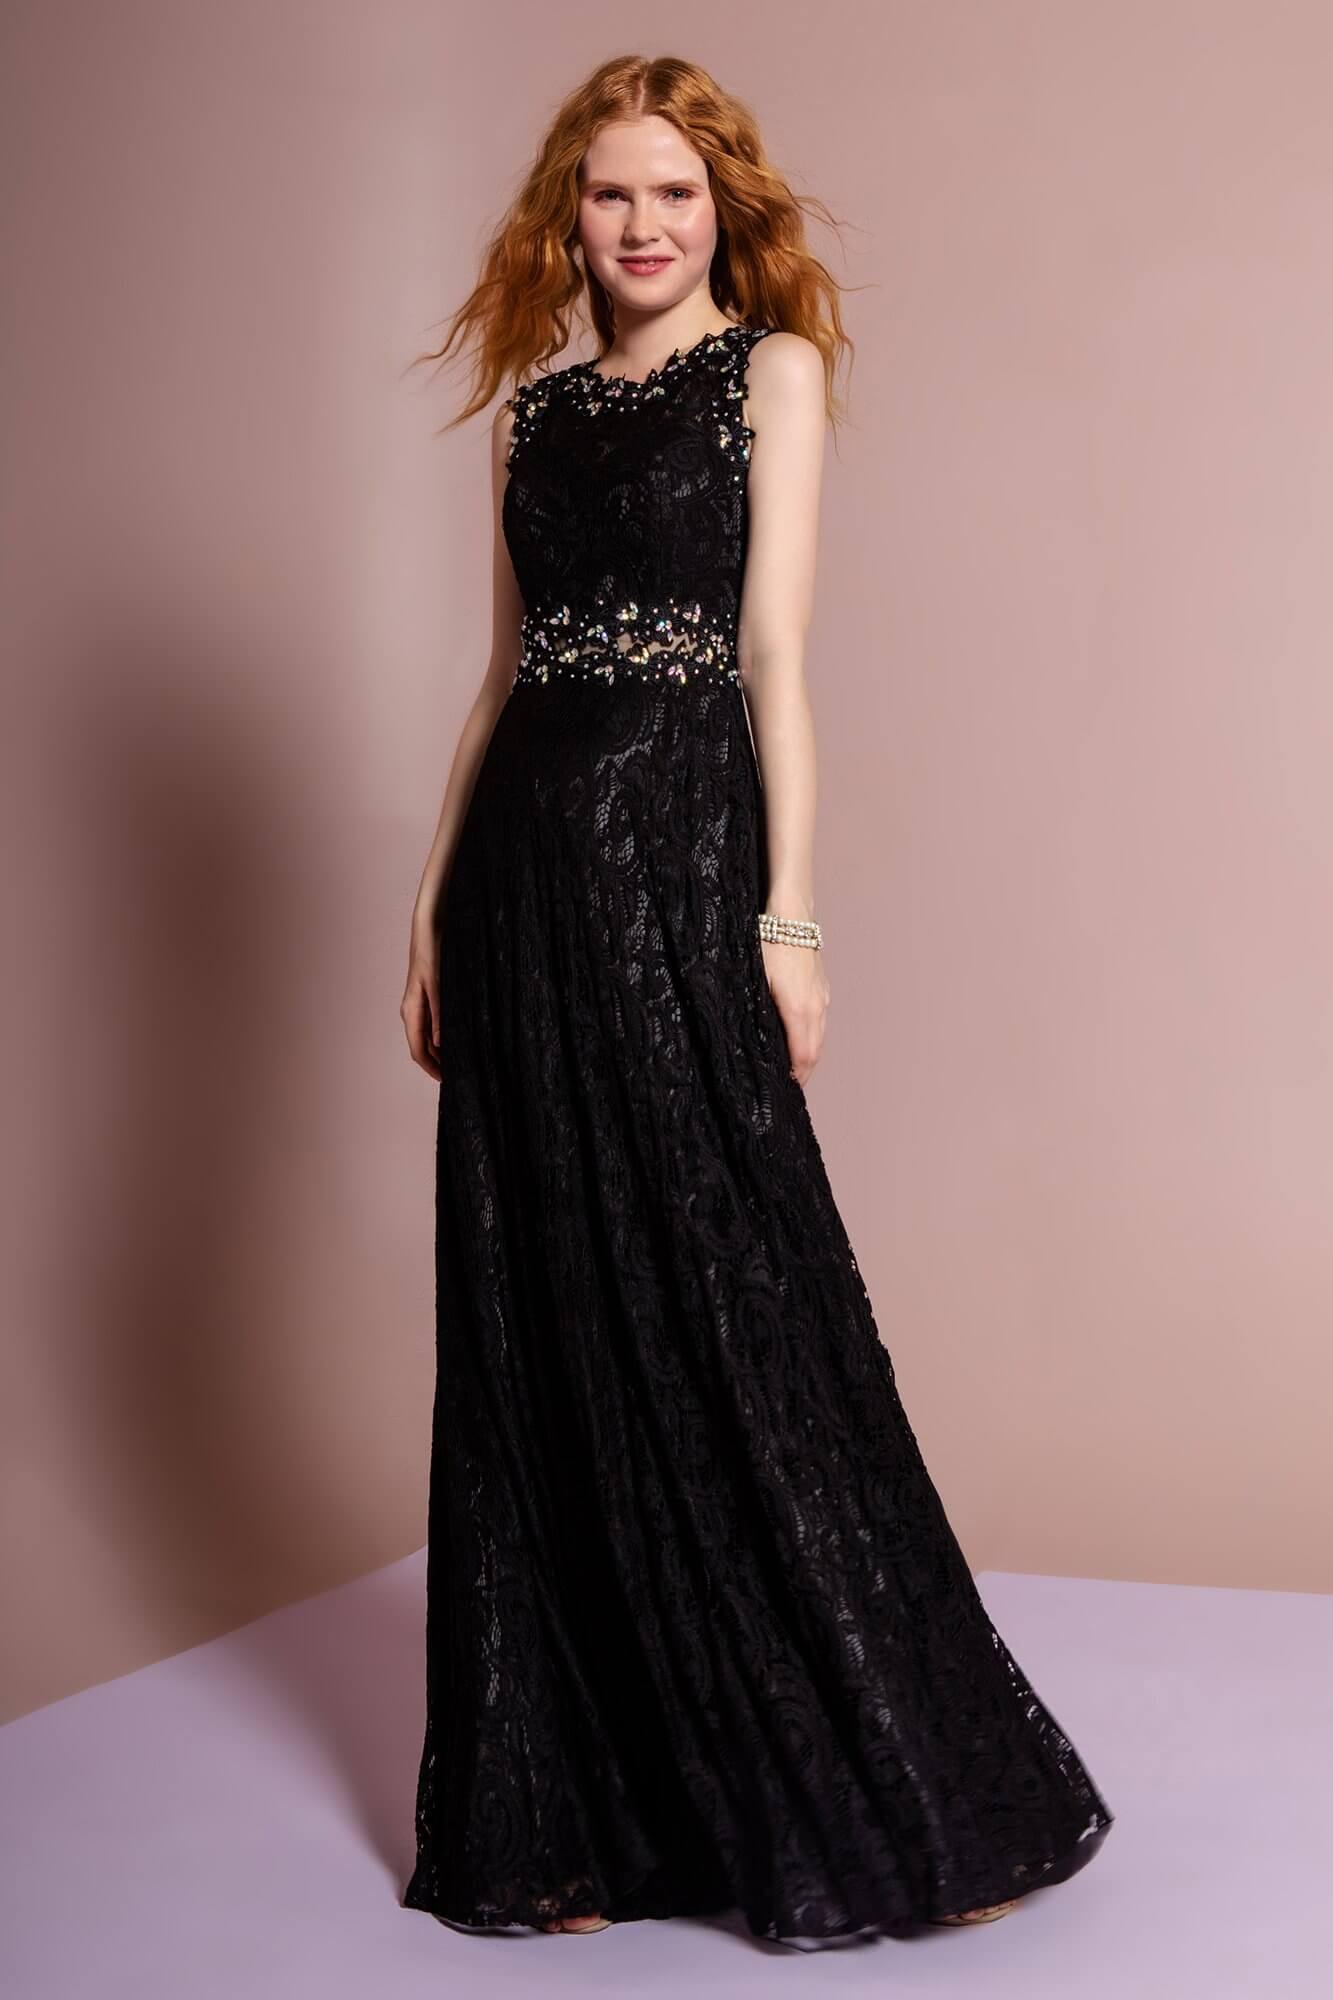 Long Sleeveless Formal Dress Sale - The Dress Outlet